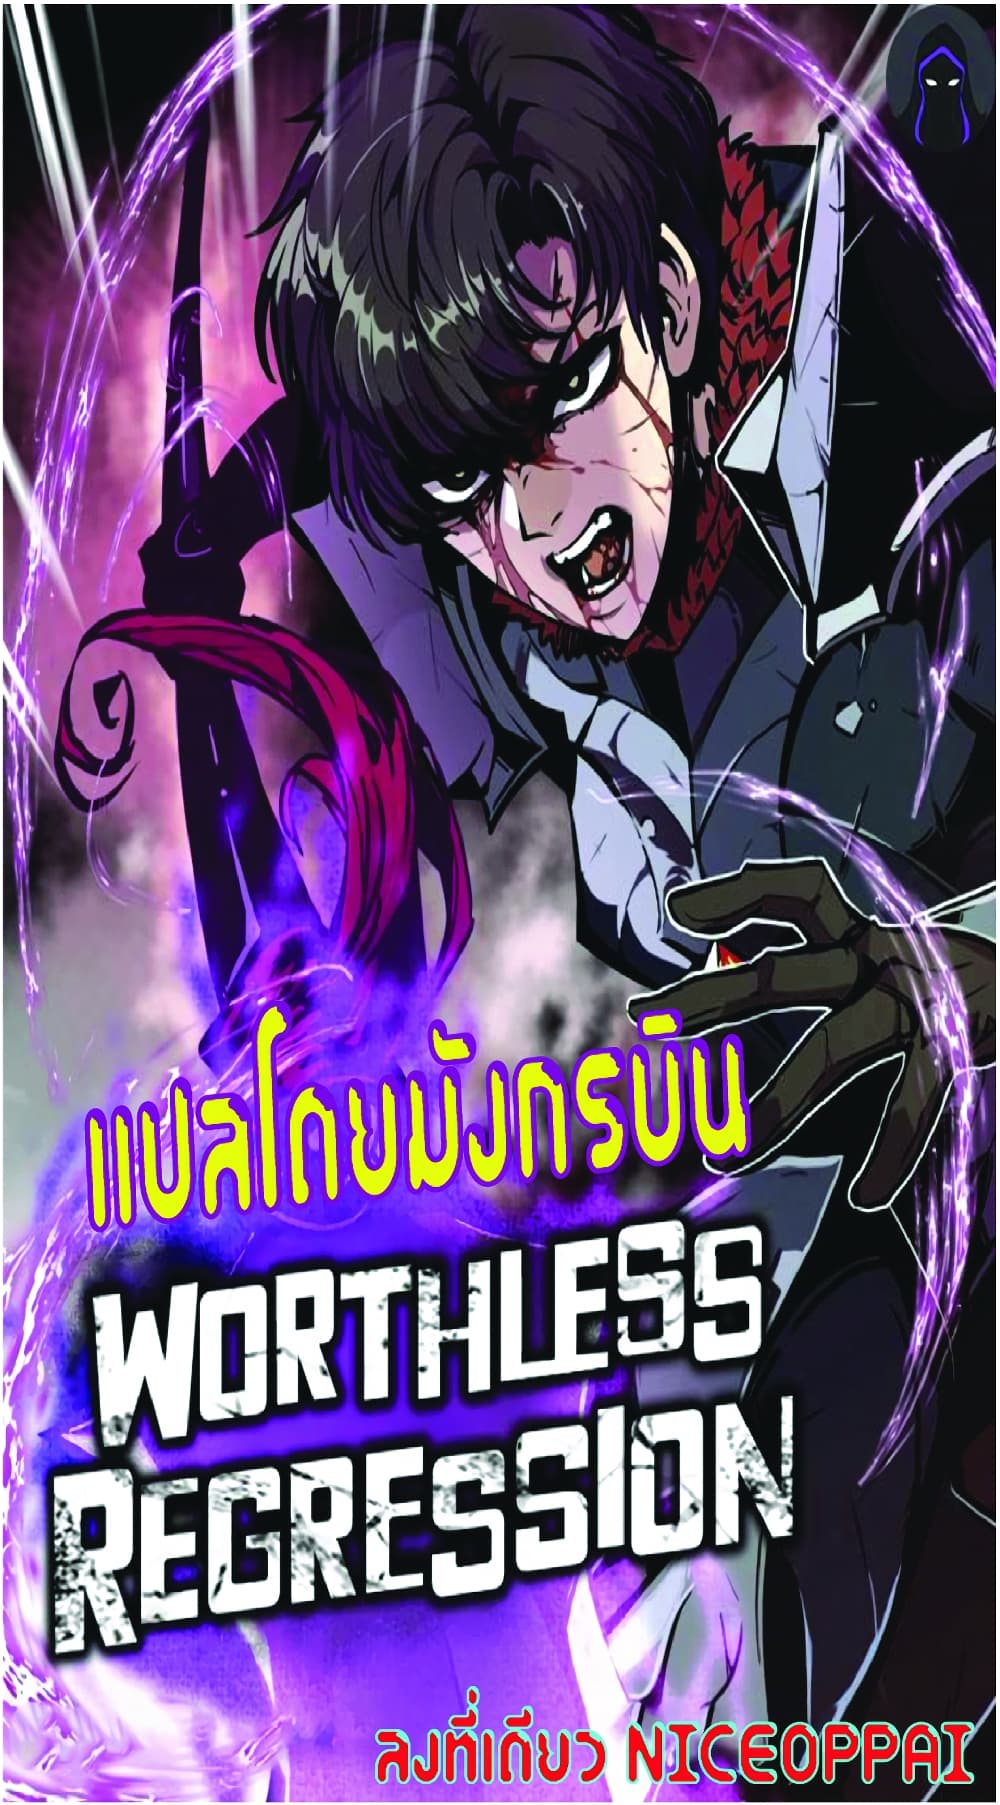 Worthless Regression21 01